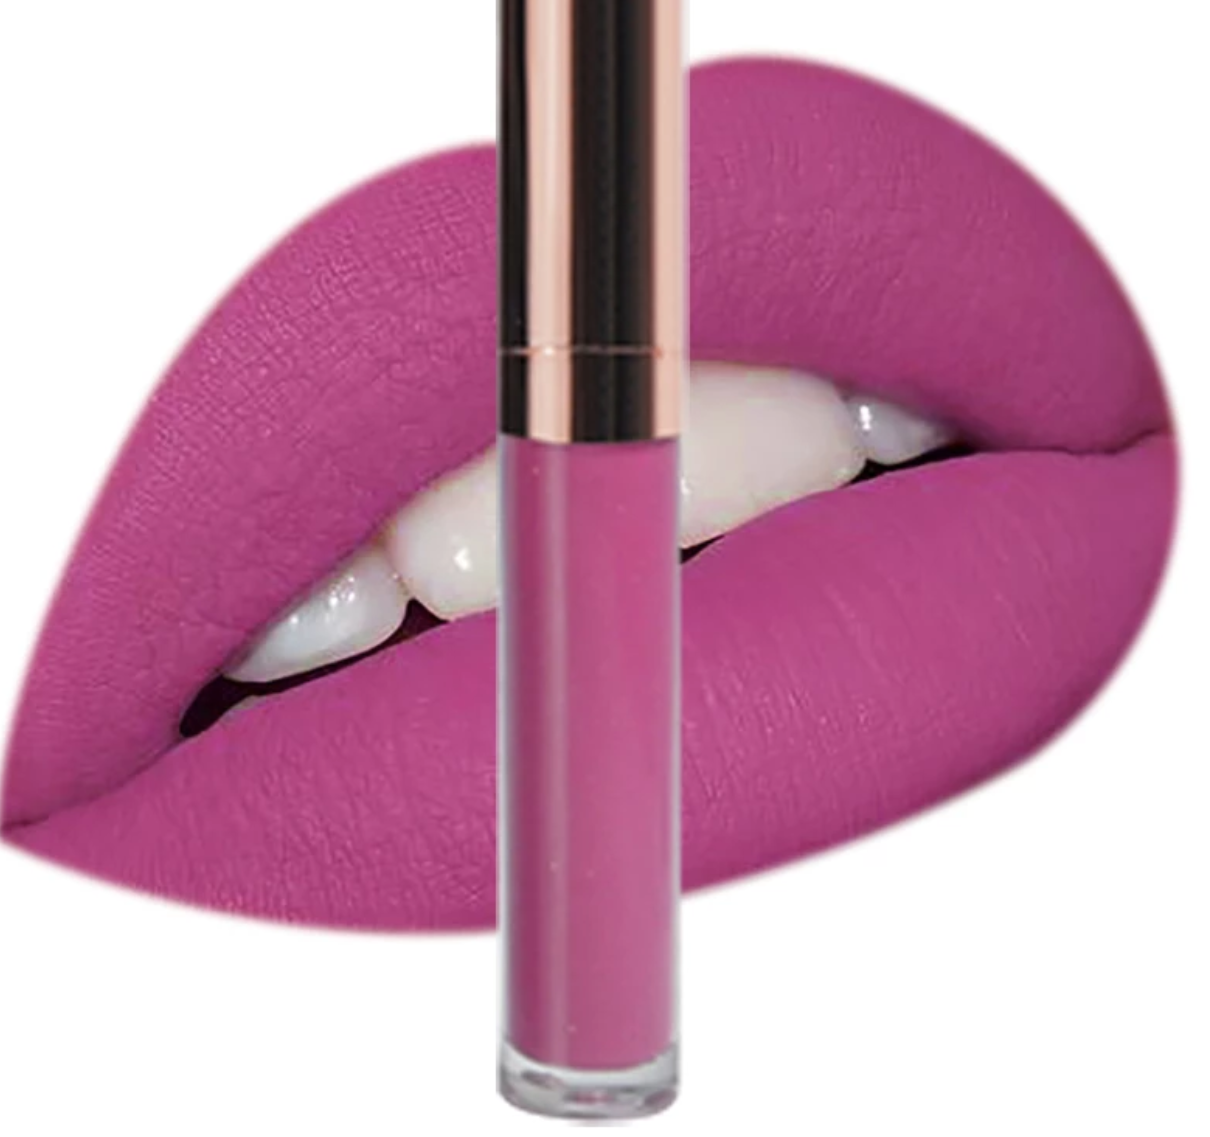 Ro's Matte Liquid Lipstick